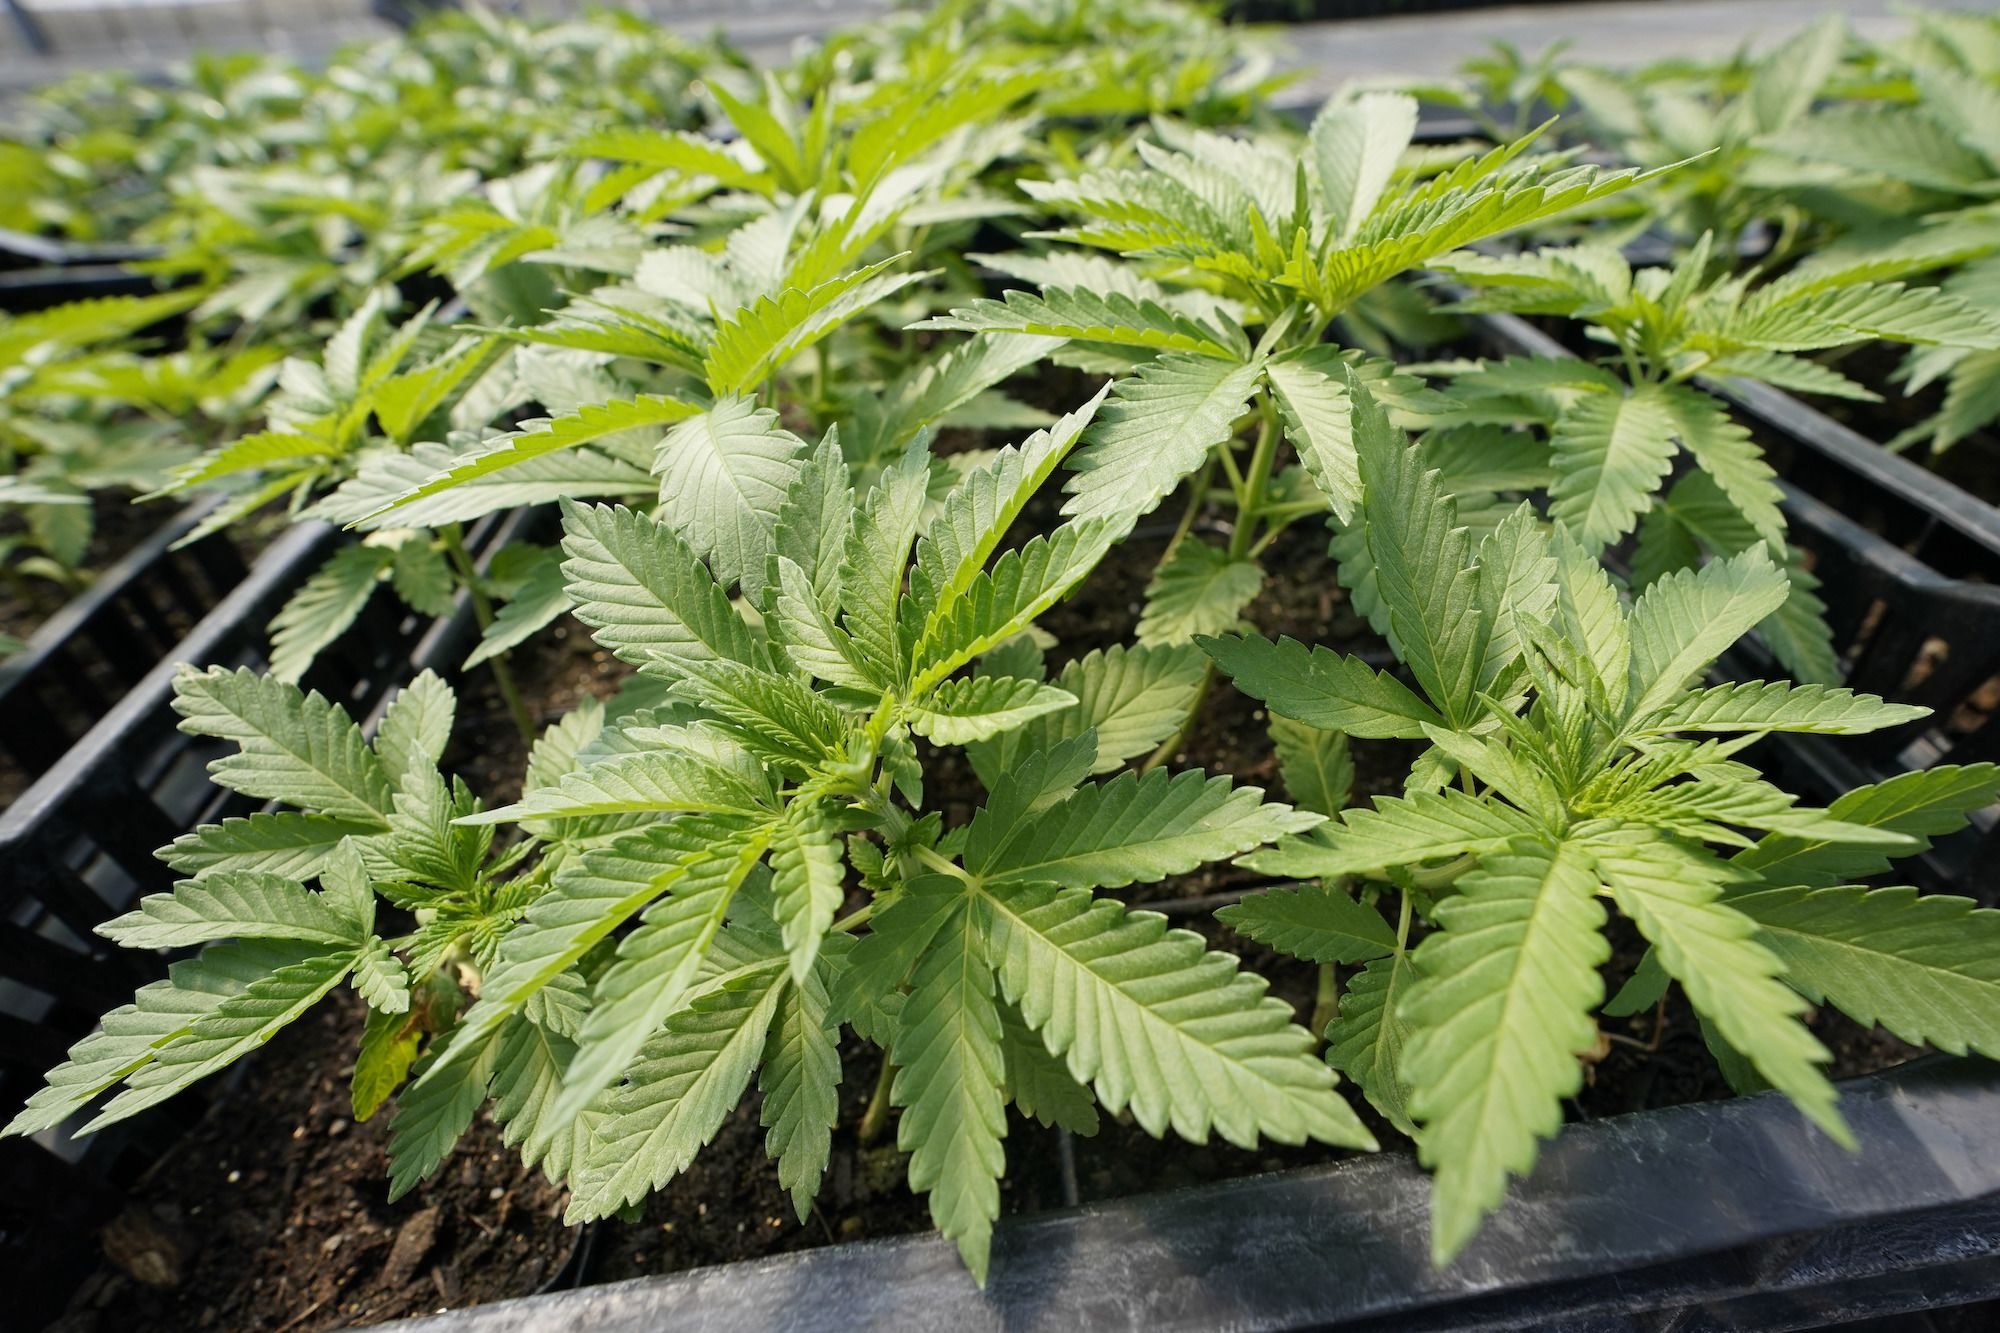 Legal weed in Missouri: How recreational marijuana is going so far